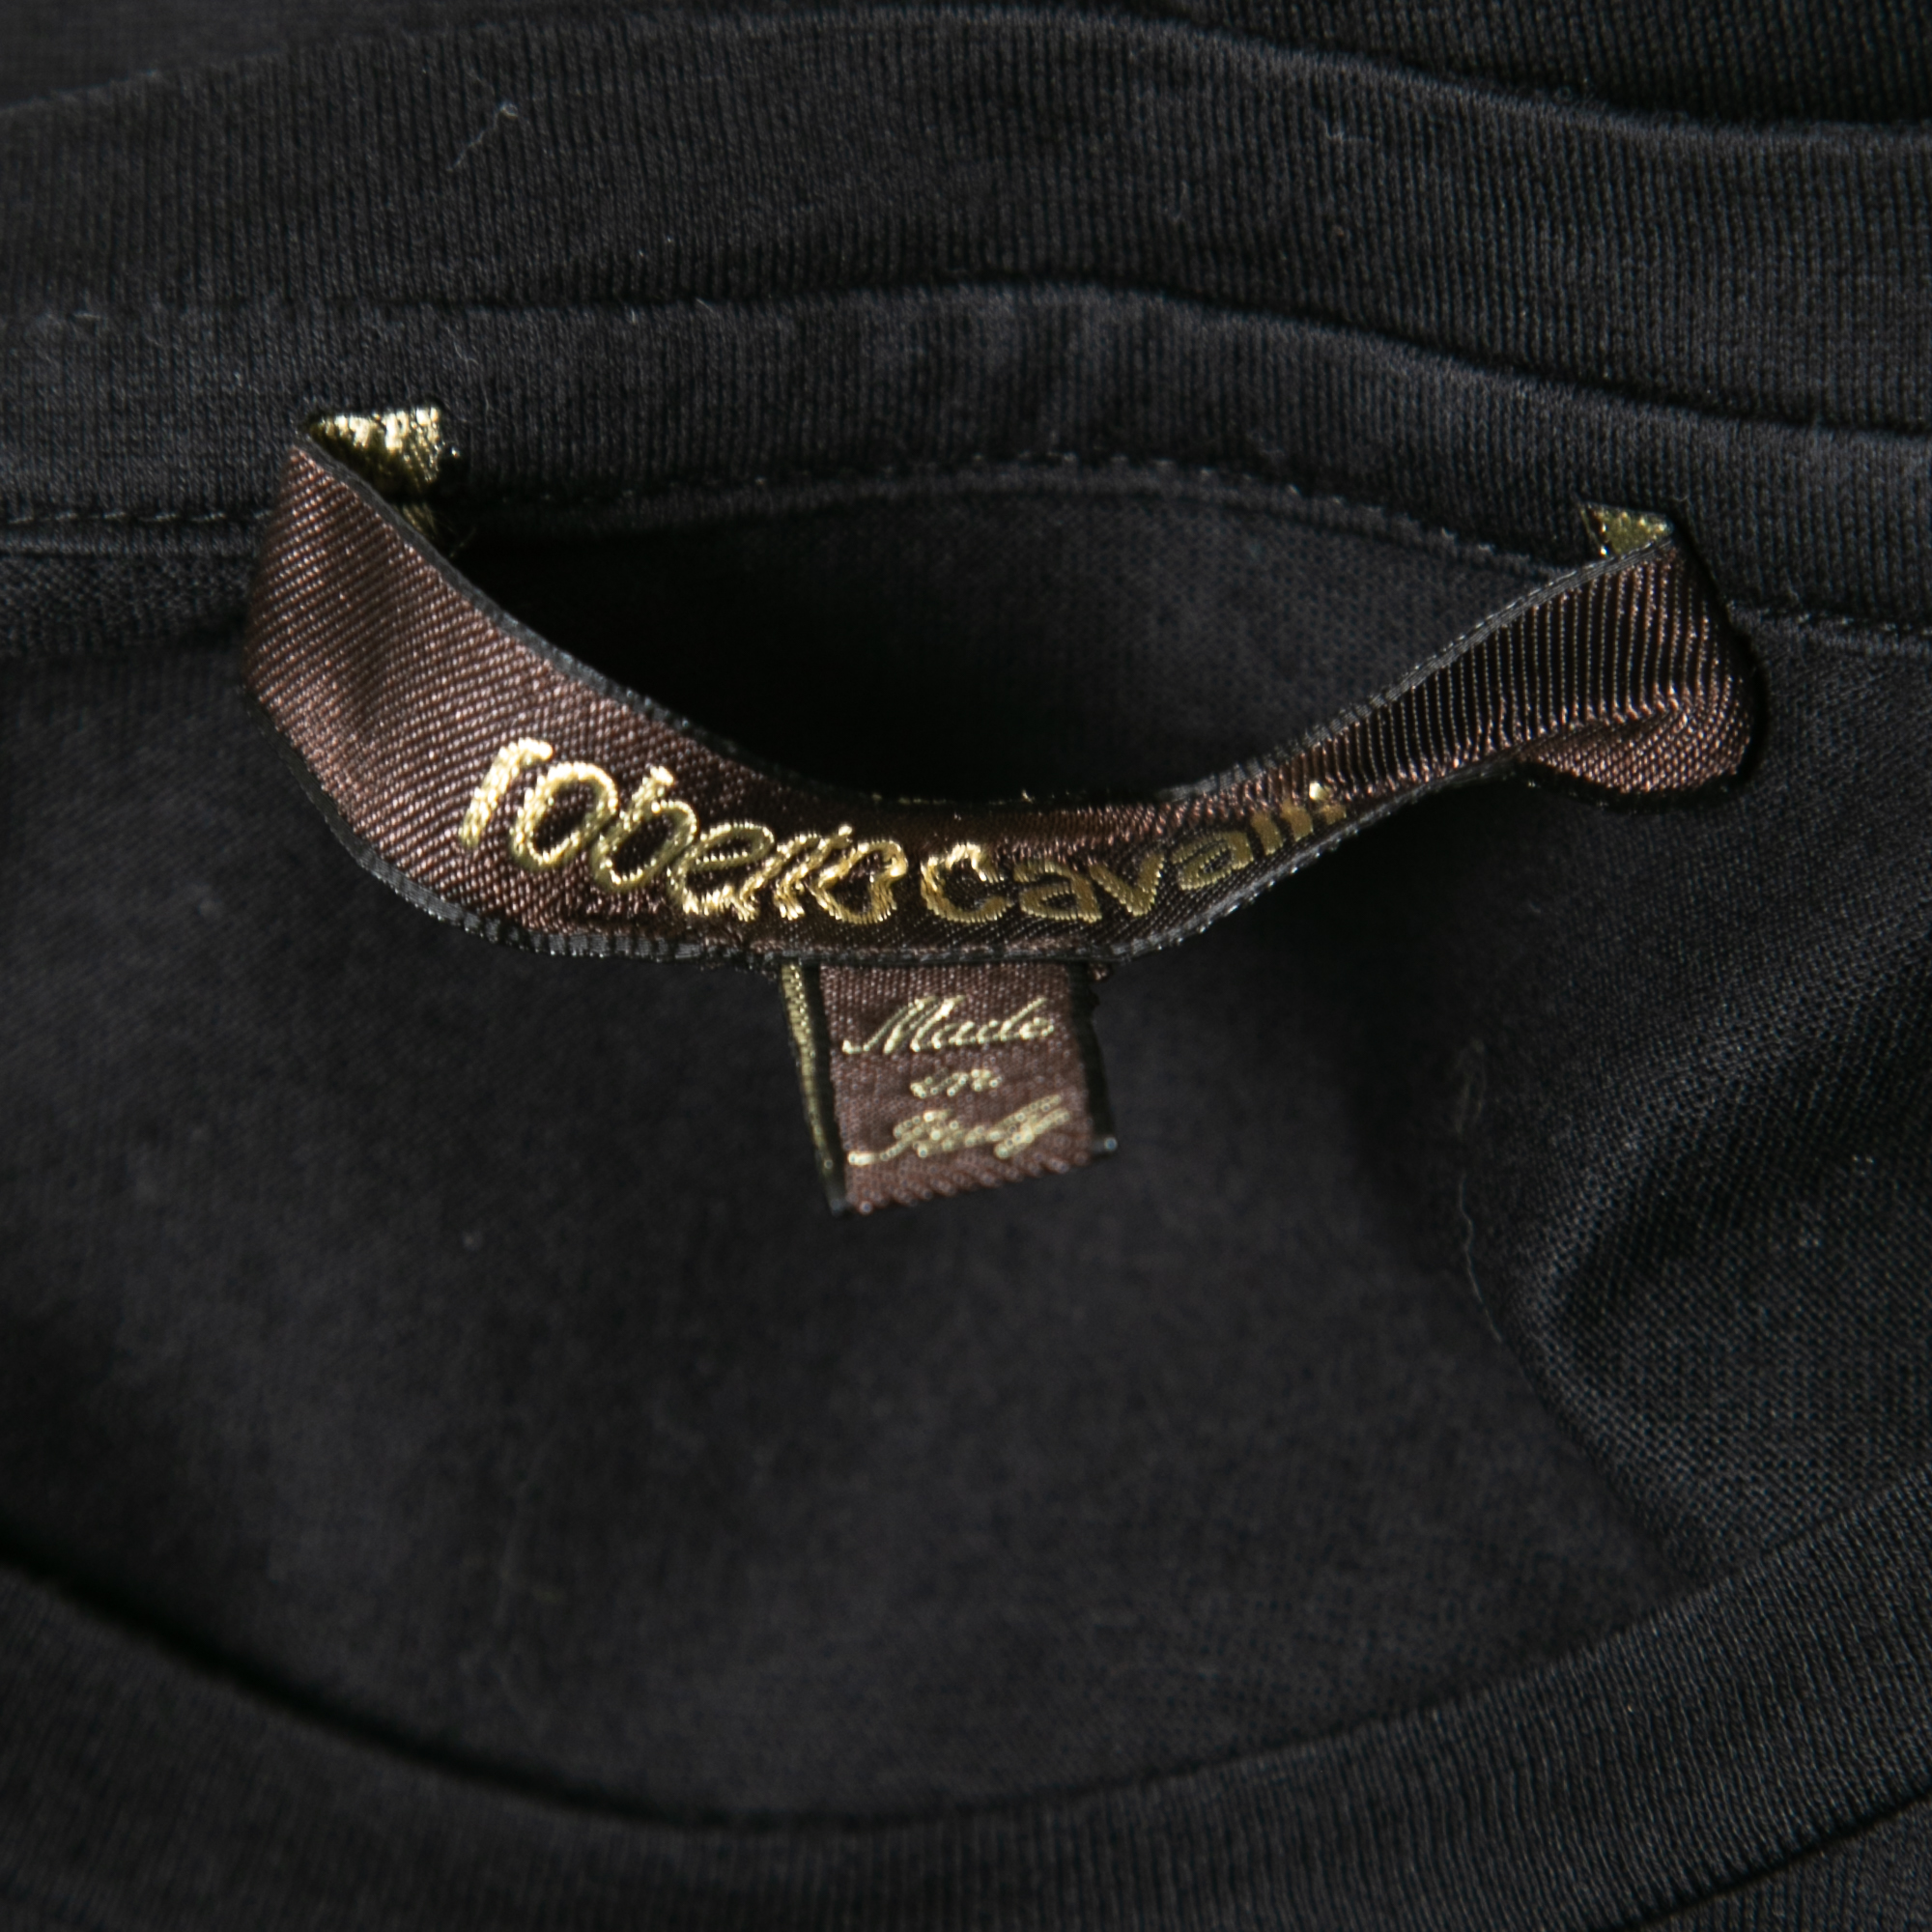 Roberto Cavalli Black Logo Print Cotton Crew Neck T-Shirt S